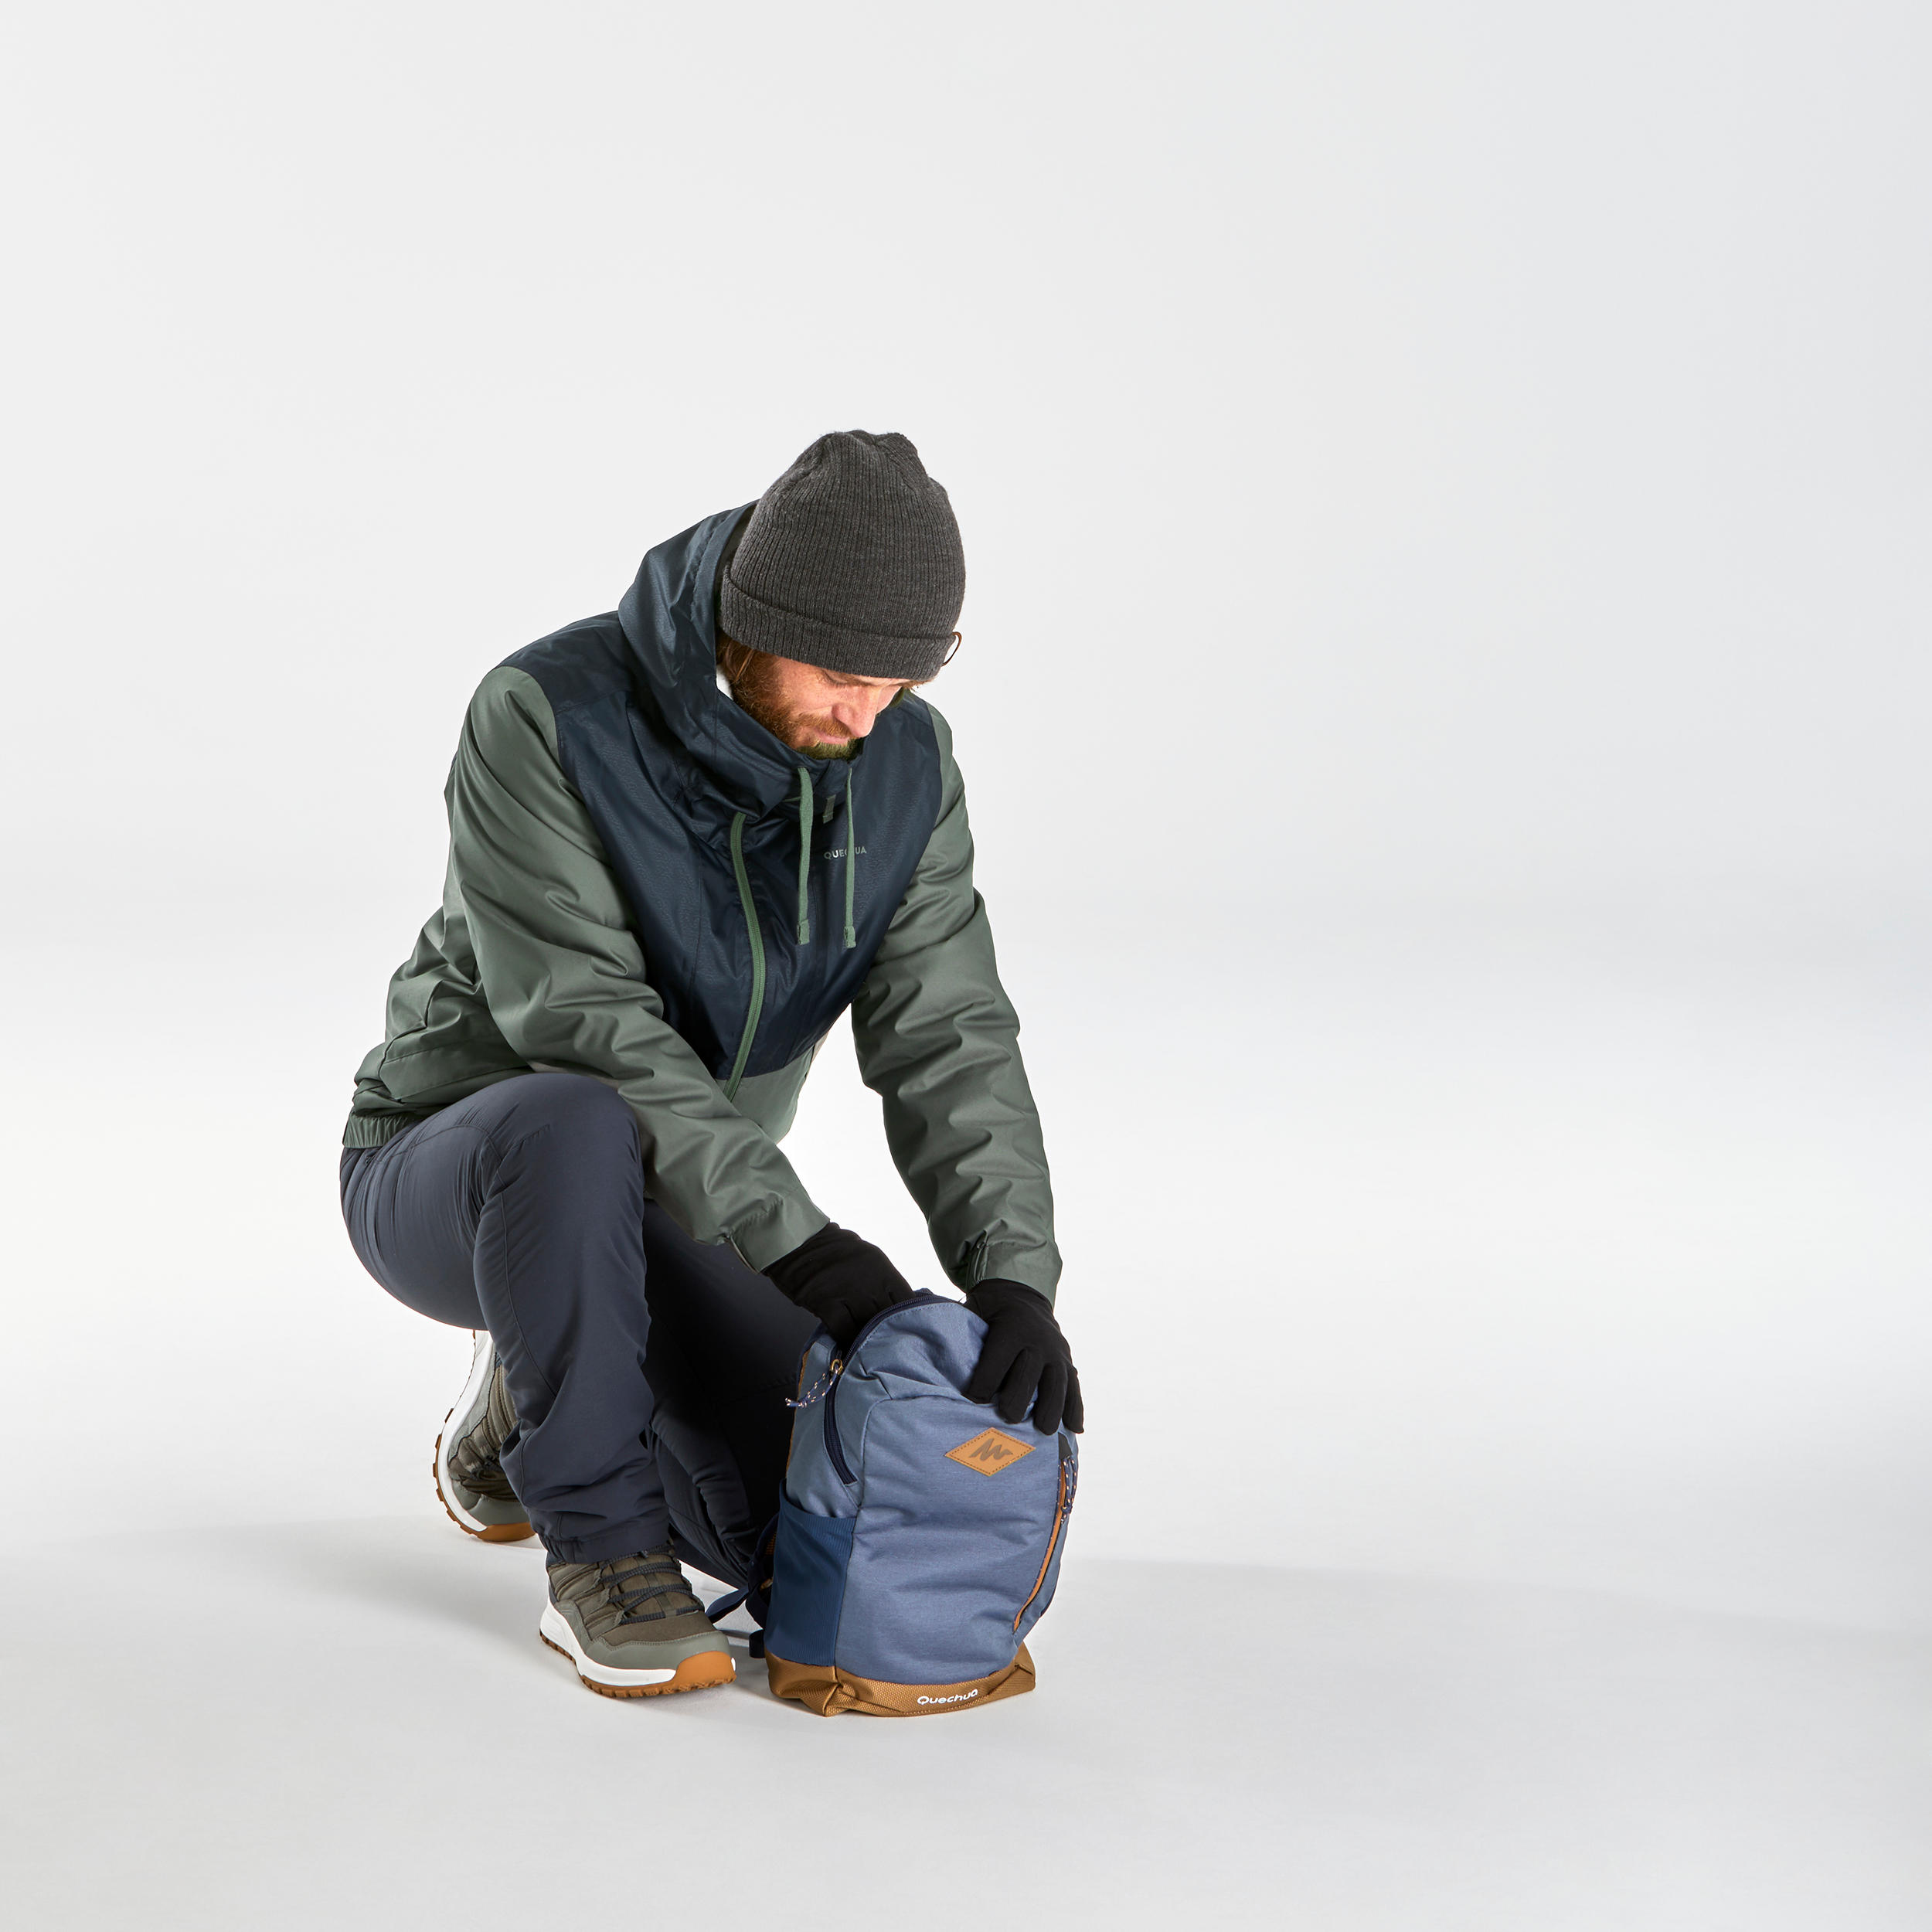 Men’s hiking waterproof winter jacket - SH100 -5°C 9/10